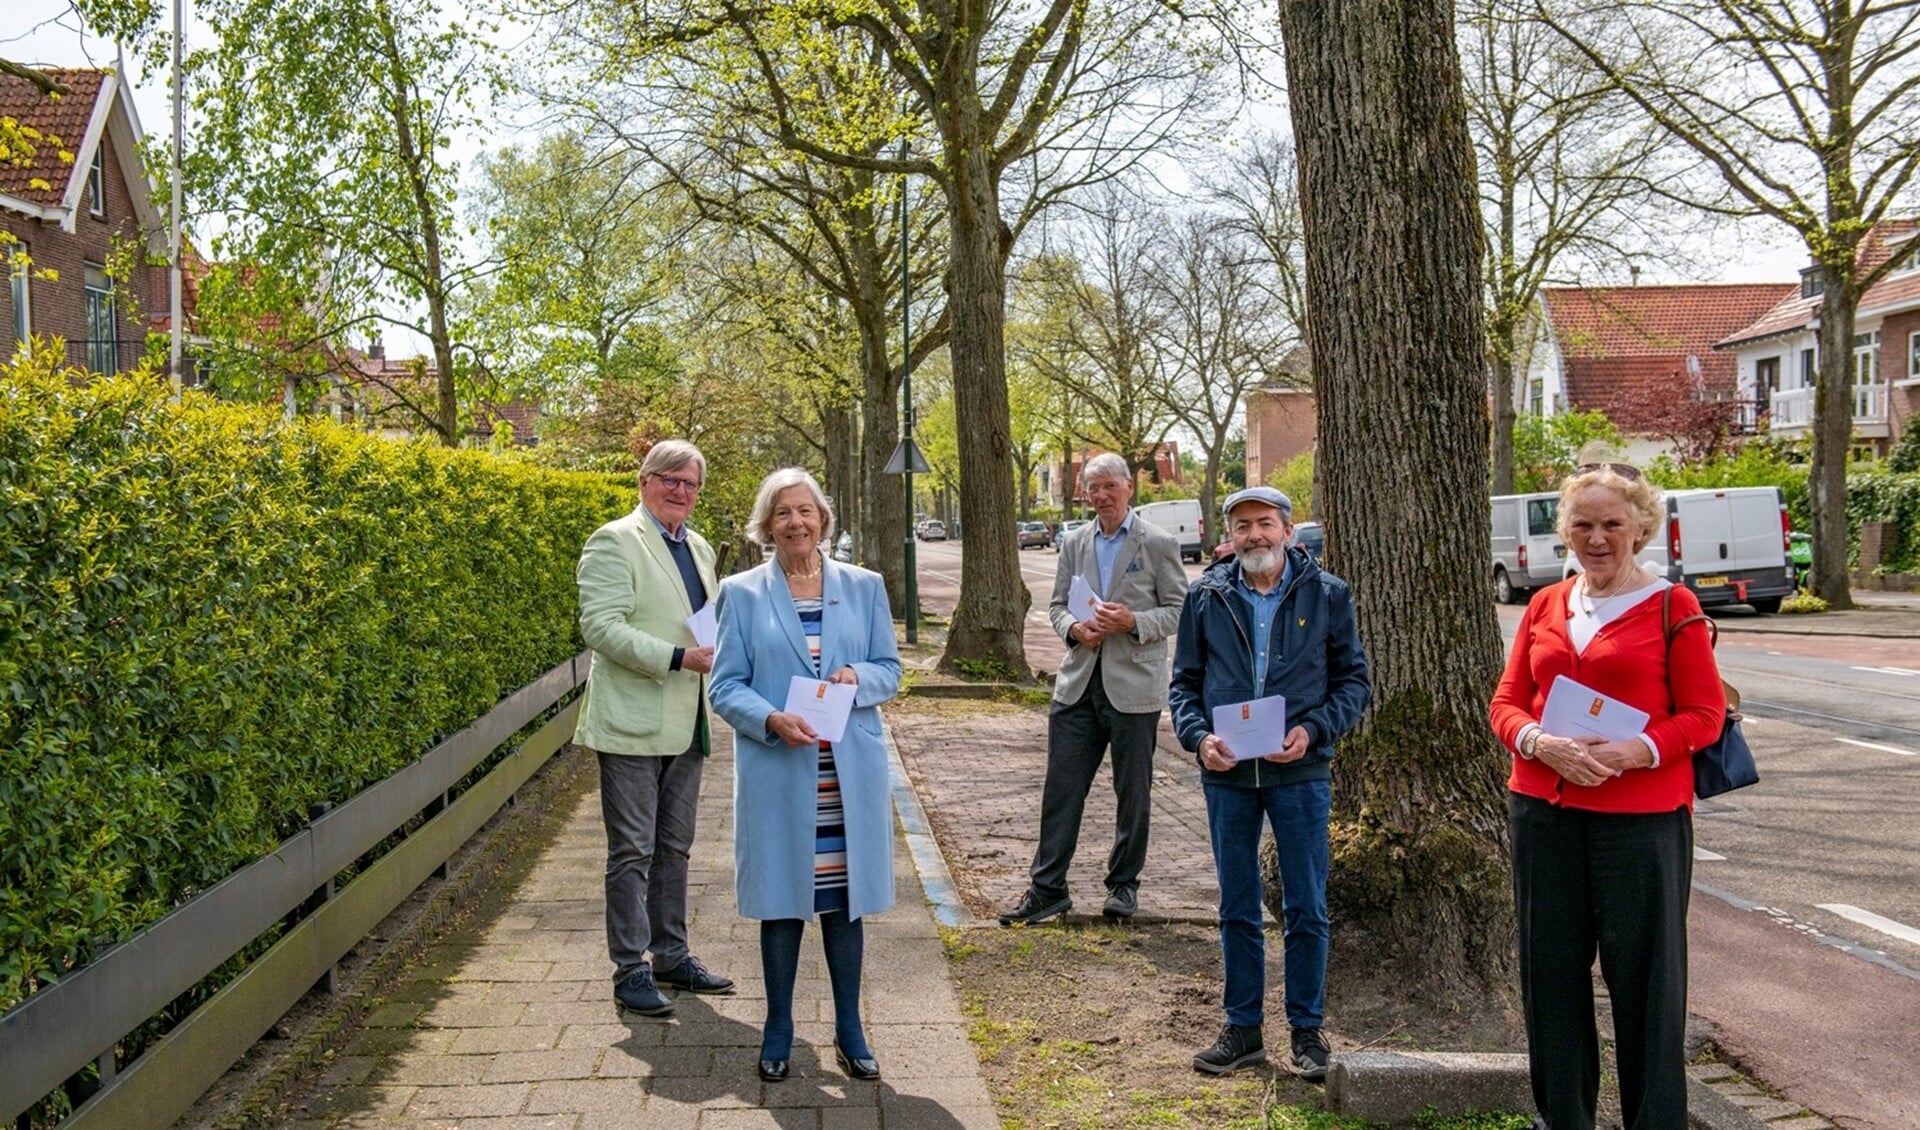 Bestuursleden aan het begin van de Mariannelaan. V.l.n.r.: Alfred van Bunge, Tilly Zwartepoorte, Marcel Mooijman, Kees van der Leer, Marieke Spliethoff (foto: Ronald Meekel).